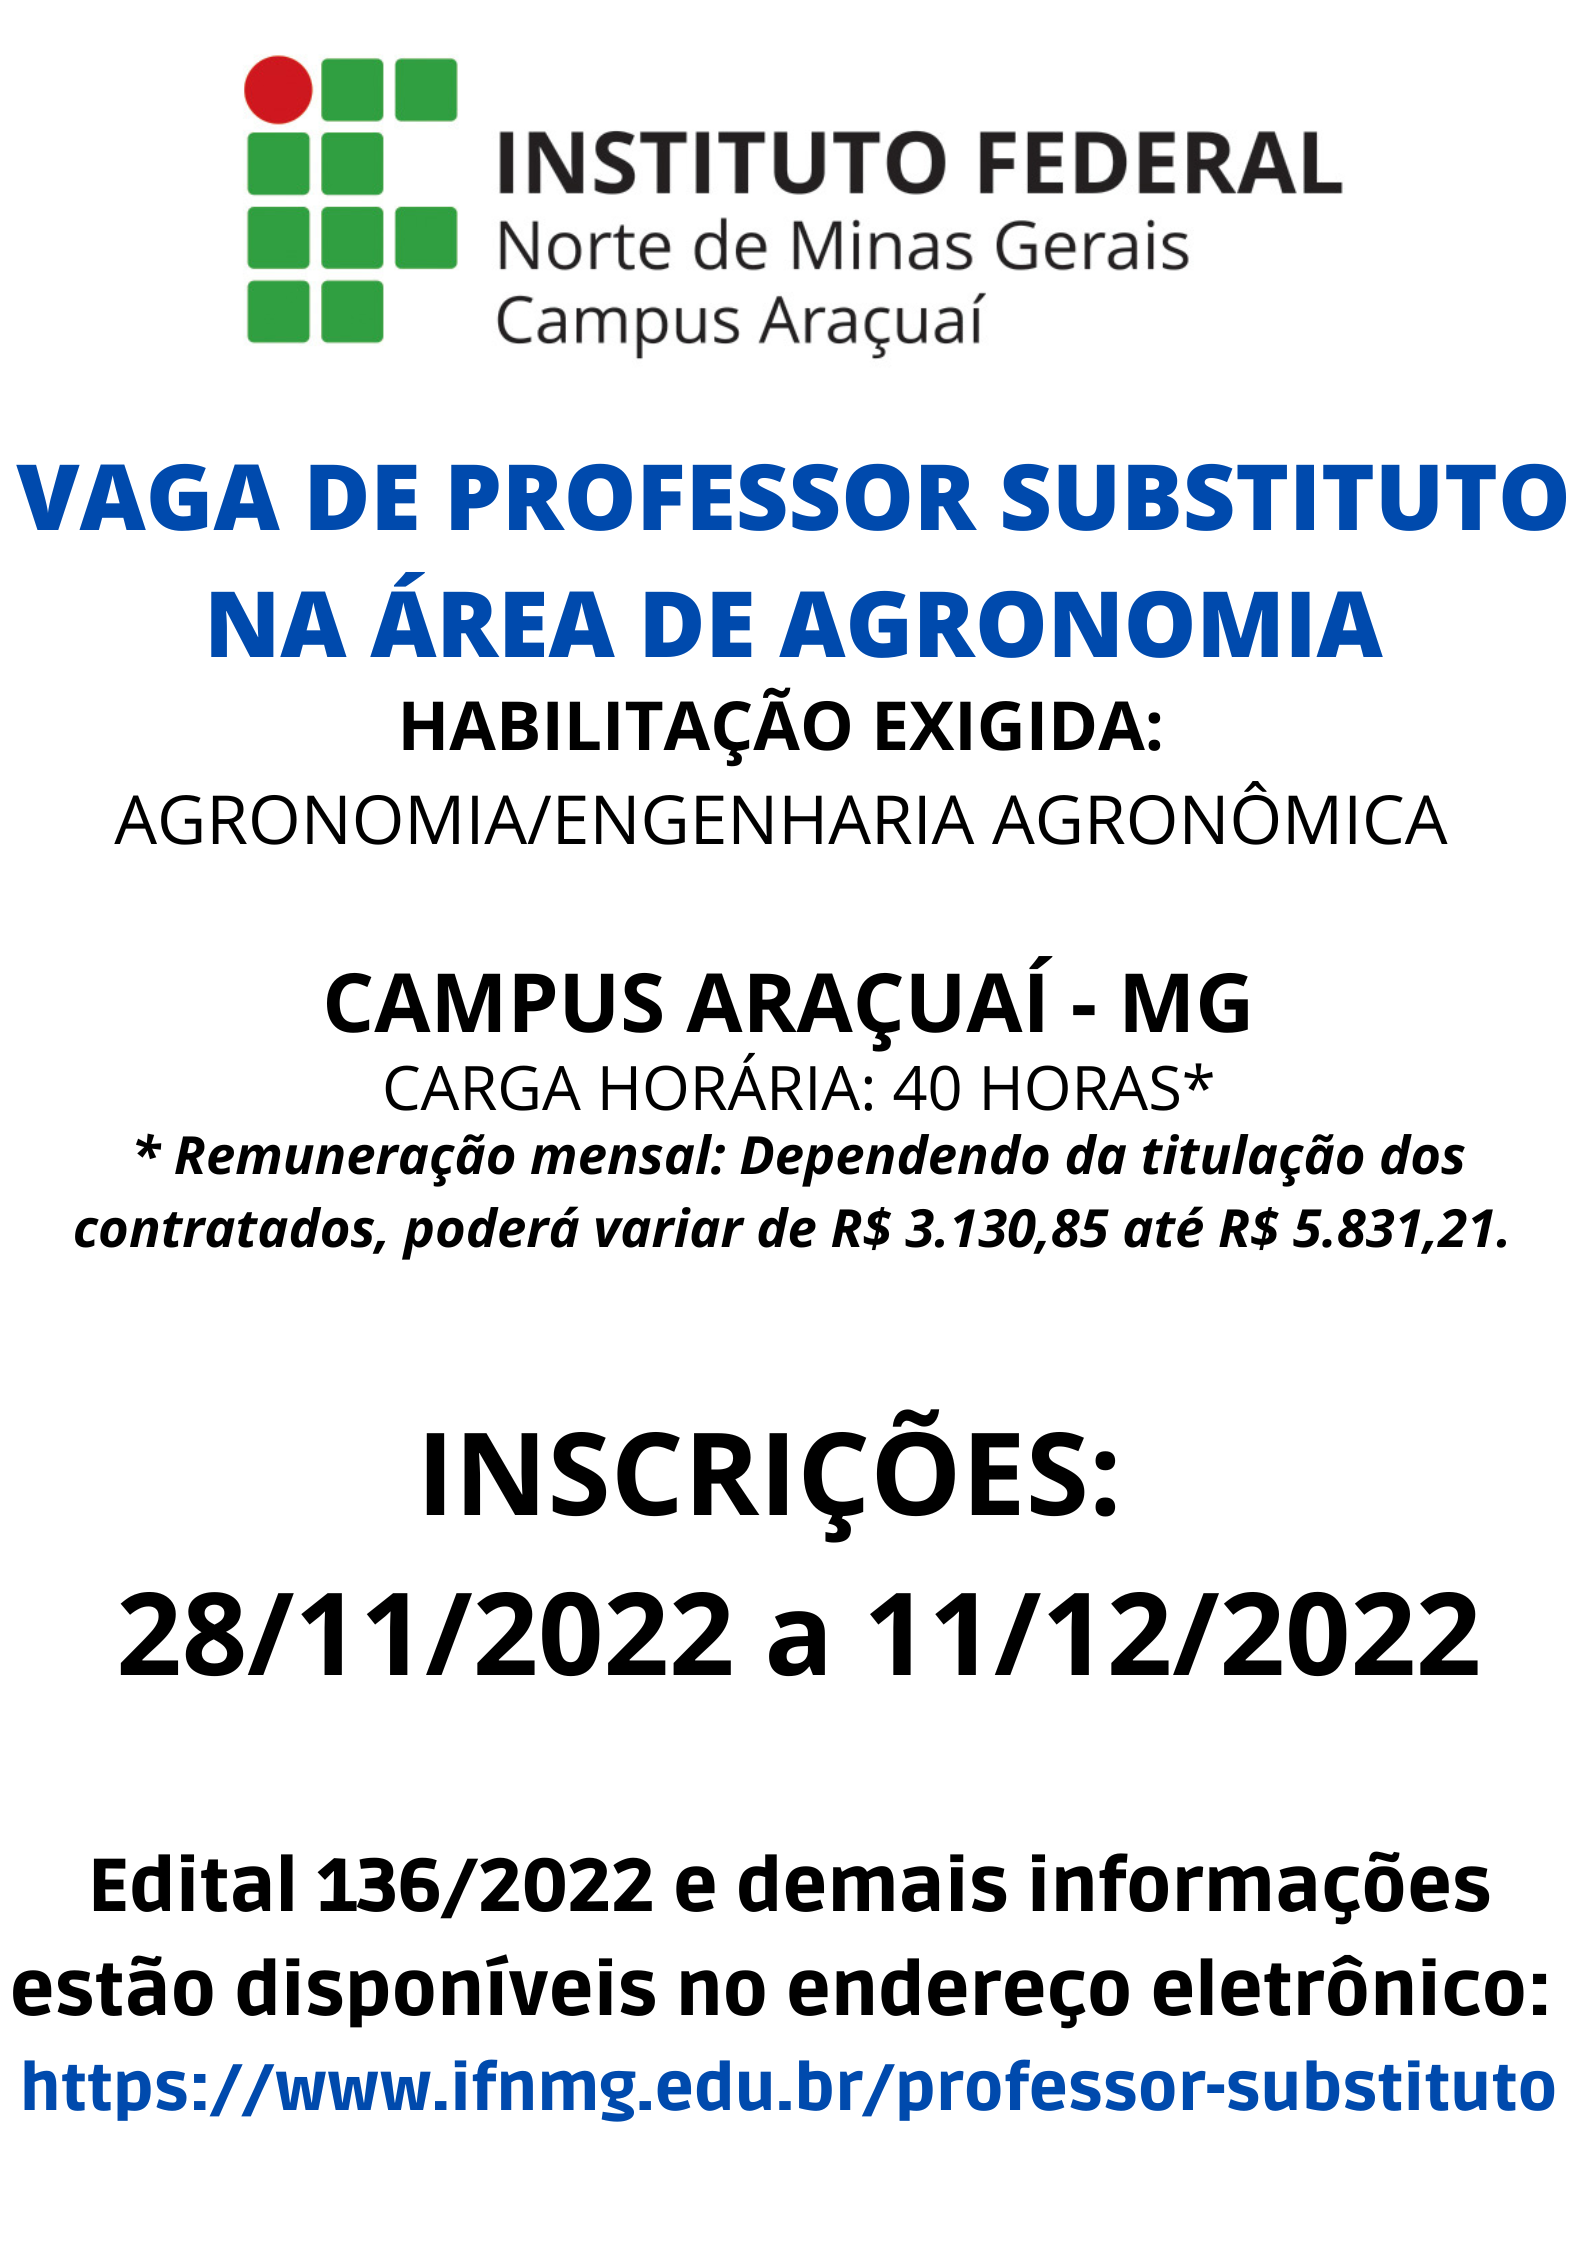 VAGA DE PROFESSOR SUBSTITUTO NA AREA DE AGRONOMIA